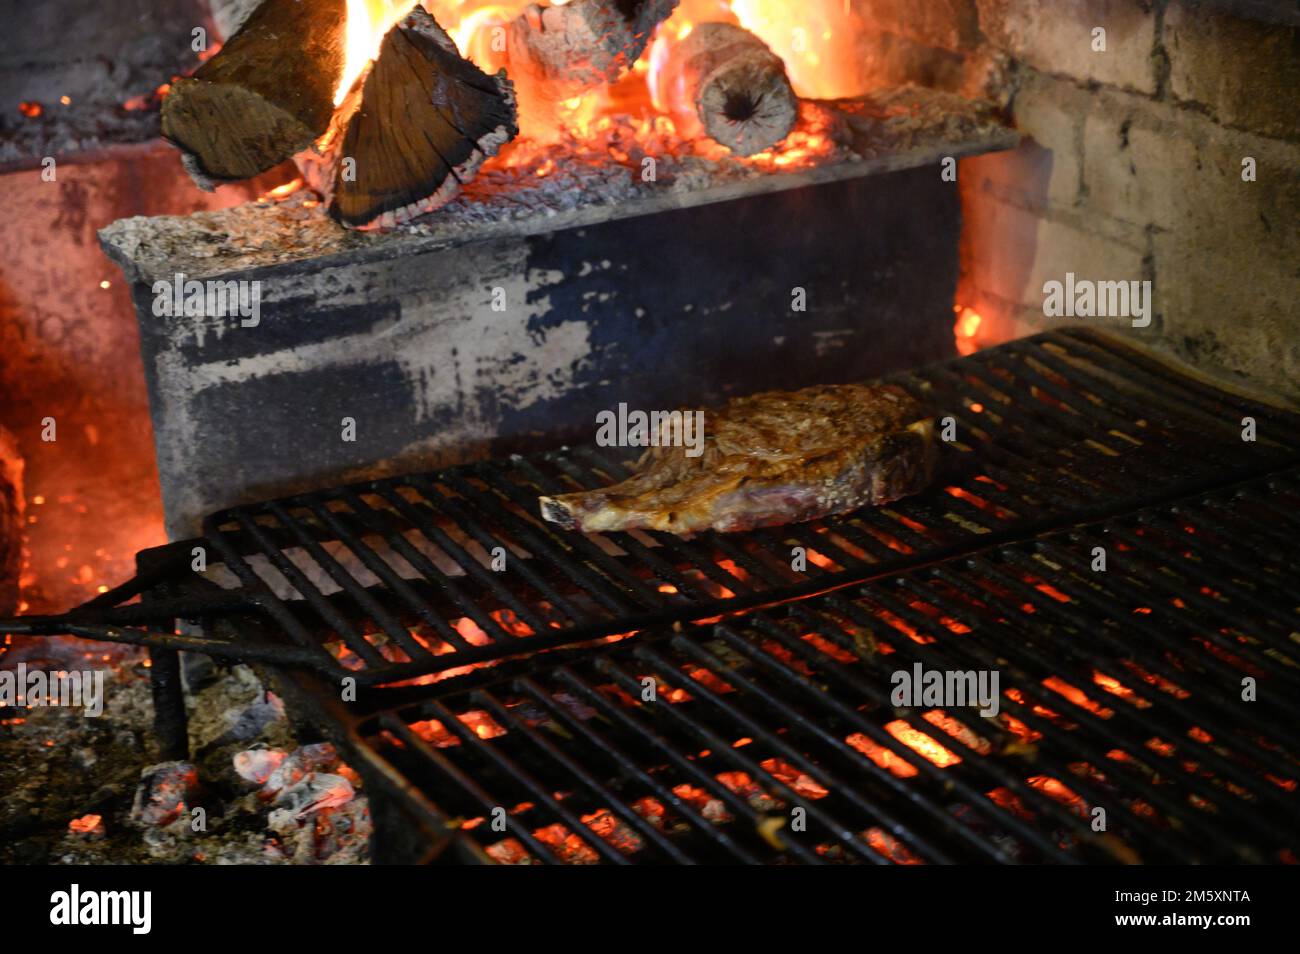 Großes Rindfleisch Rib Eye Steak gegrillt auf Olivenholz Brennholz Grill in  kleinen Dorf Restaurant in Portugal Stockfotografie - Alamy